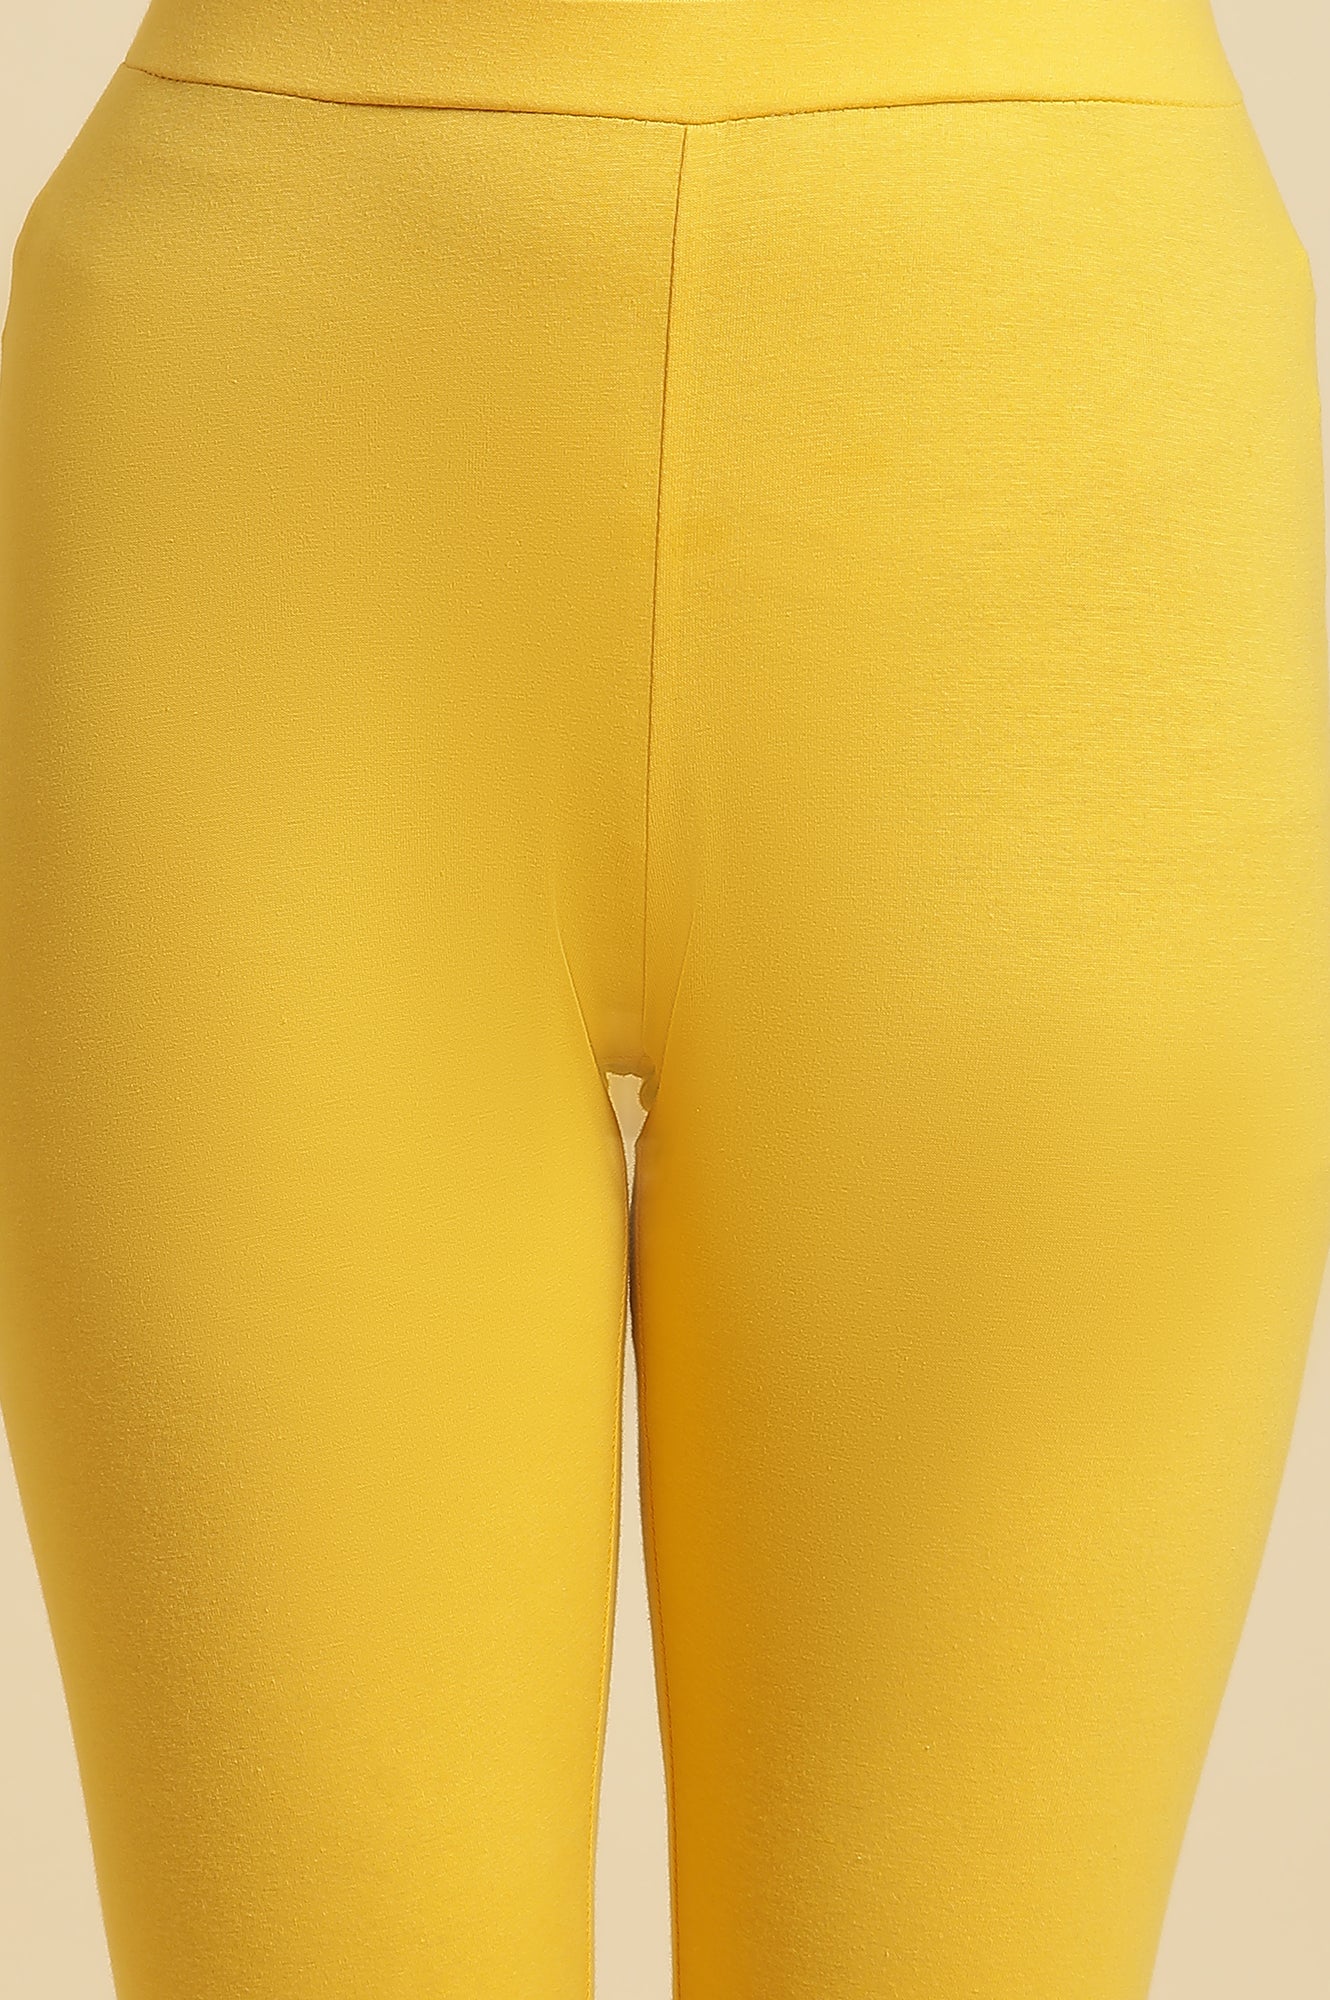 Yellow Cotton Ljersey Lycra Tights